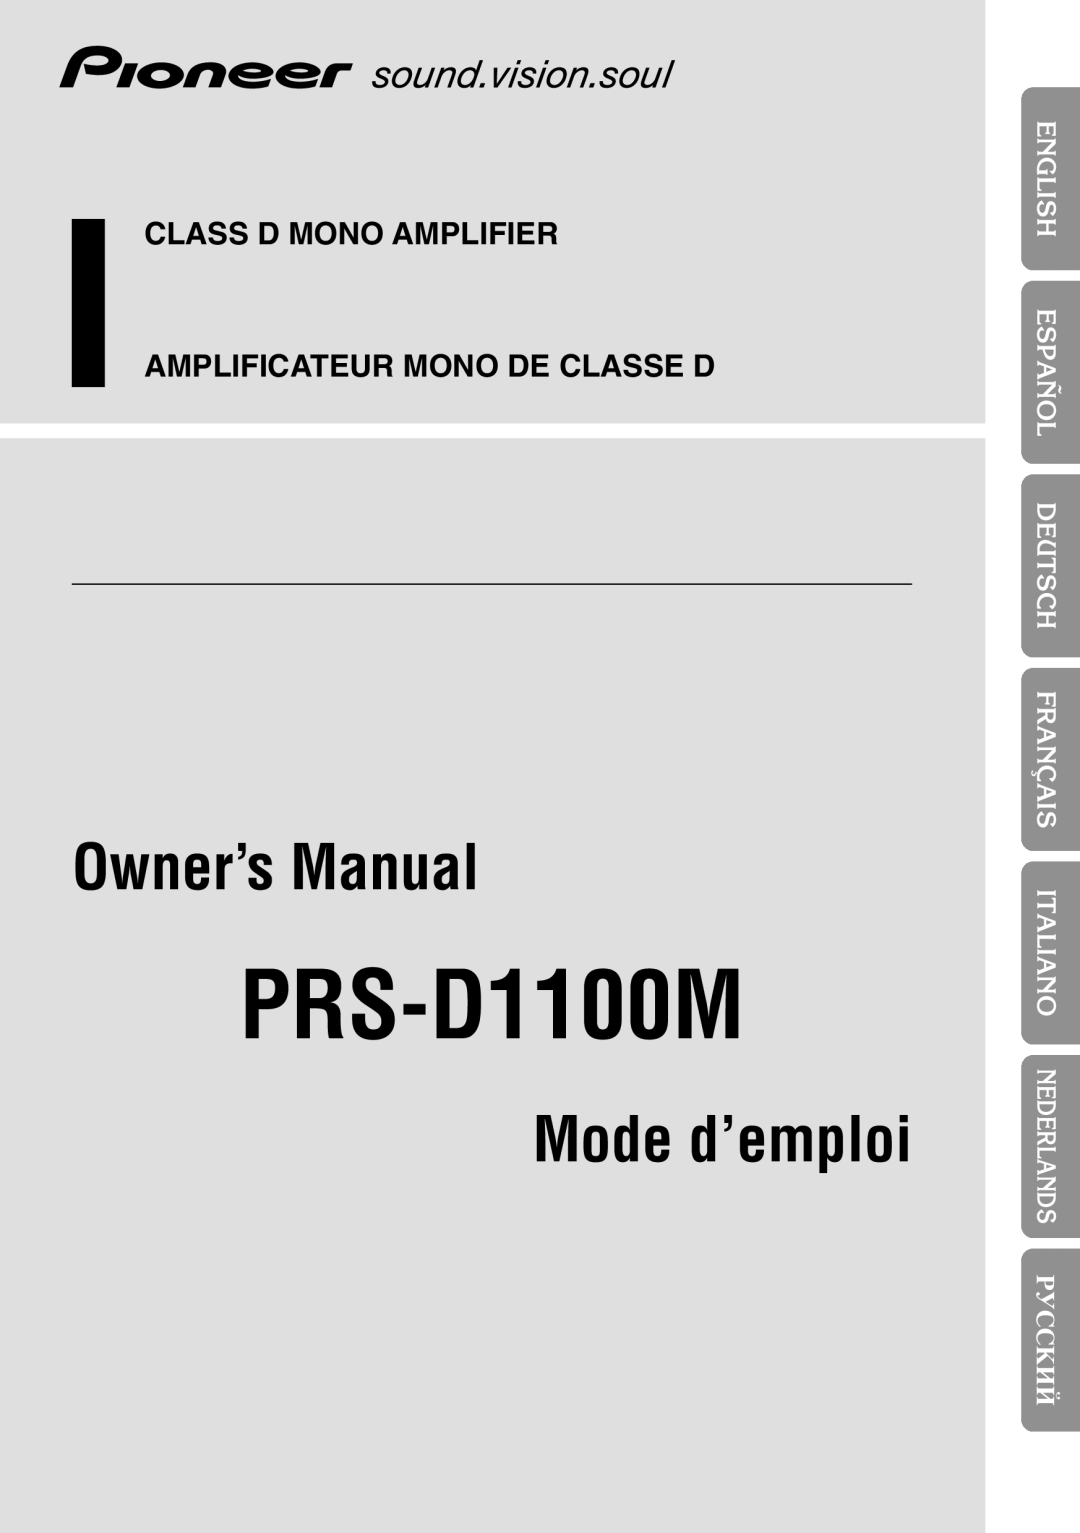 Pioneer PRS-D1100M owner manual êìëëäàâ, Owner’s Manual, Mode d’emploi, Class D Mono Amplifier 